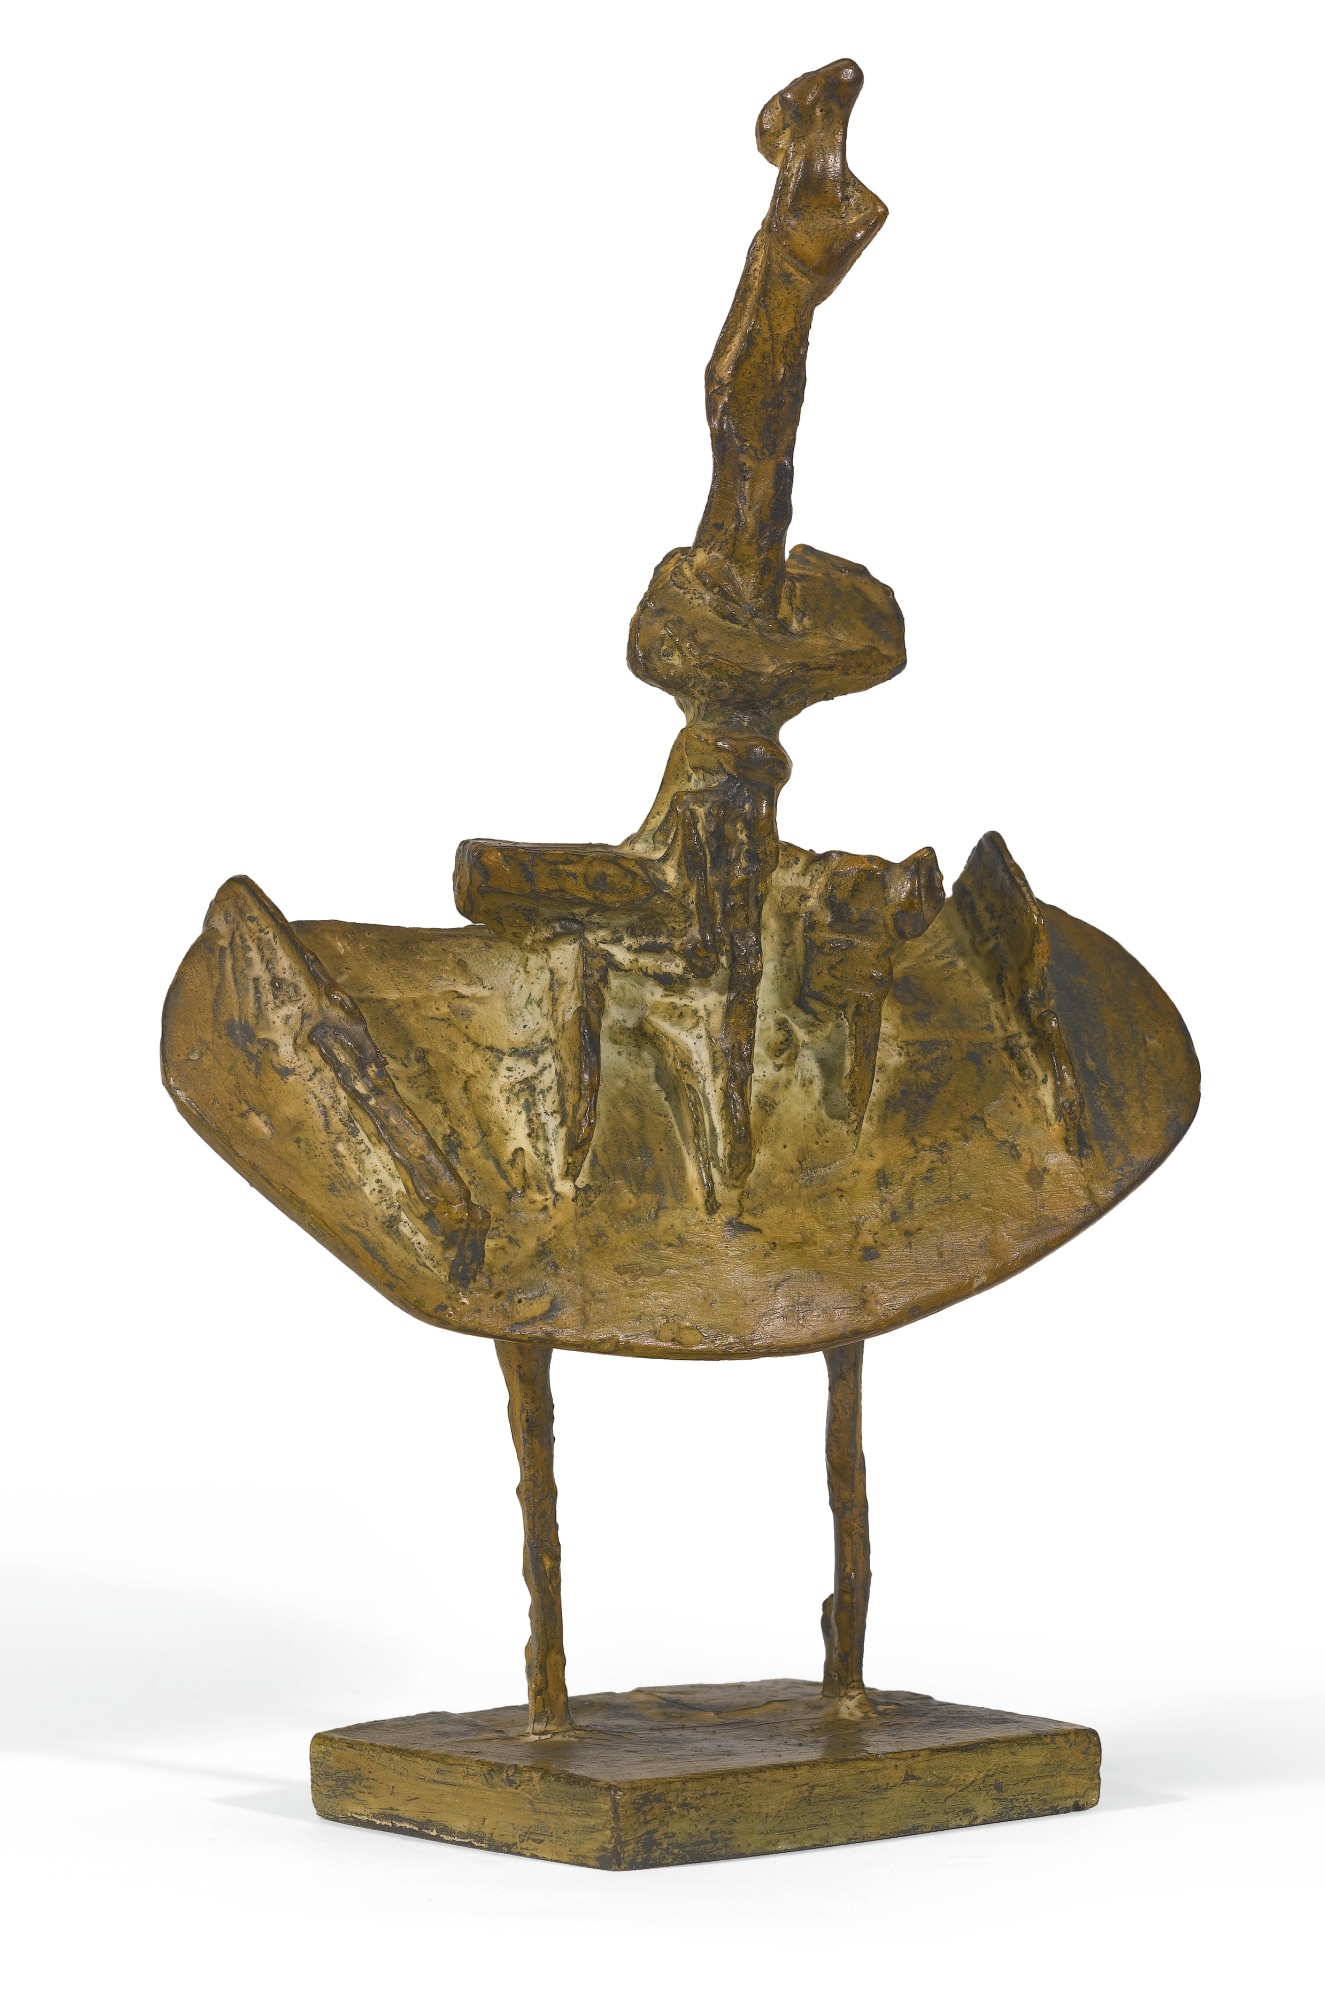 Artwork by Bernard Meadows, MAQUETTE FOR LARGE FLAT BIRD, Made of bronze